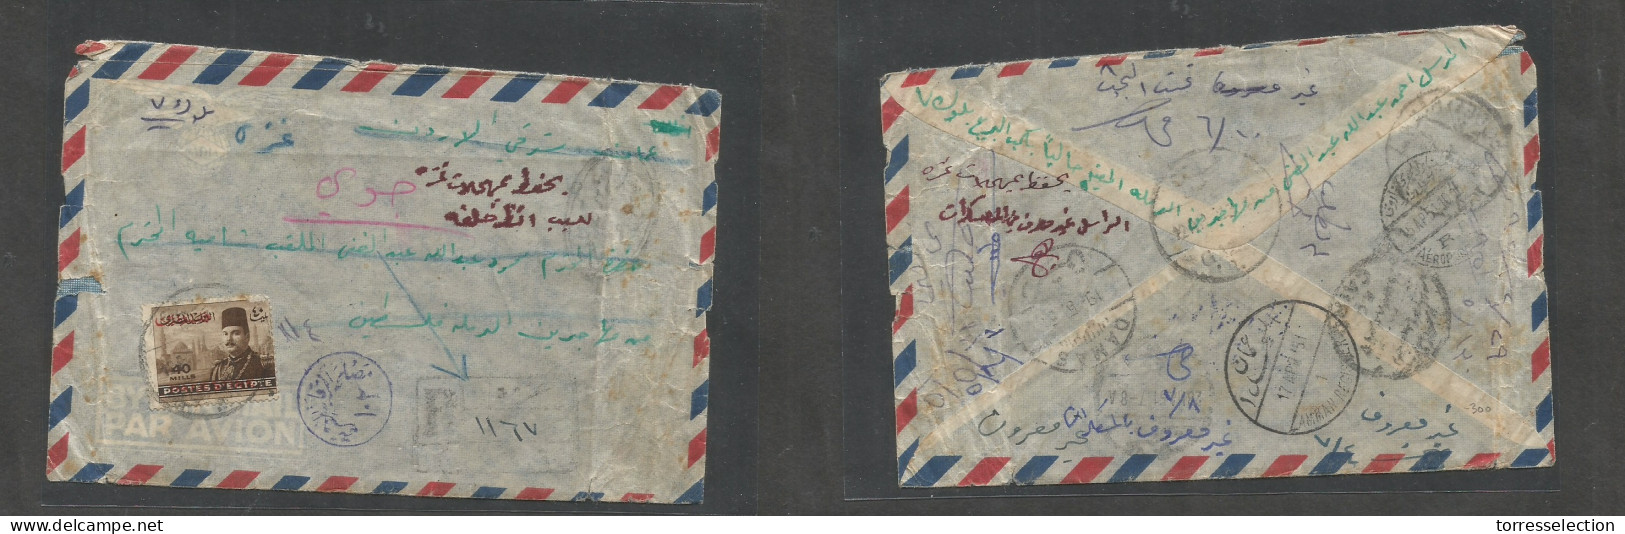 PALESTINE. 1951 (April) Gaza - Damas - Amman, Retour. Registered Air Single Red Ovptd Fkd Envelope Reverse Transited. V  - Palestine